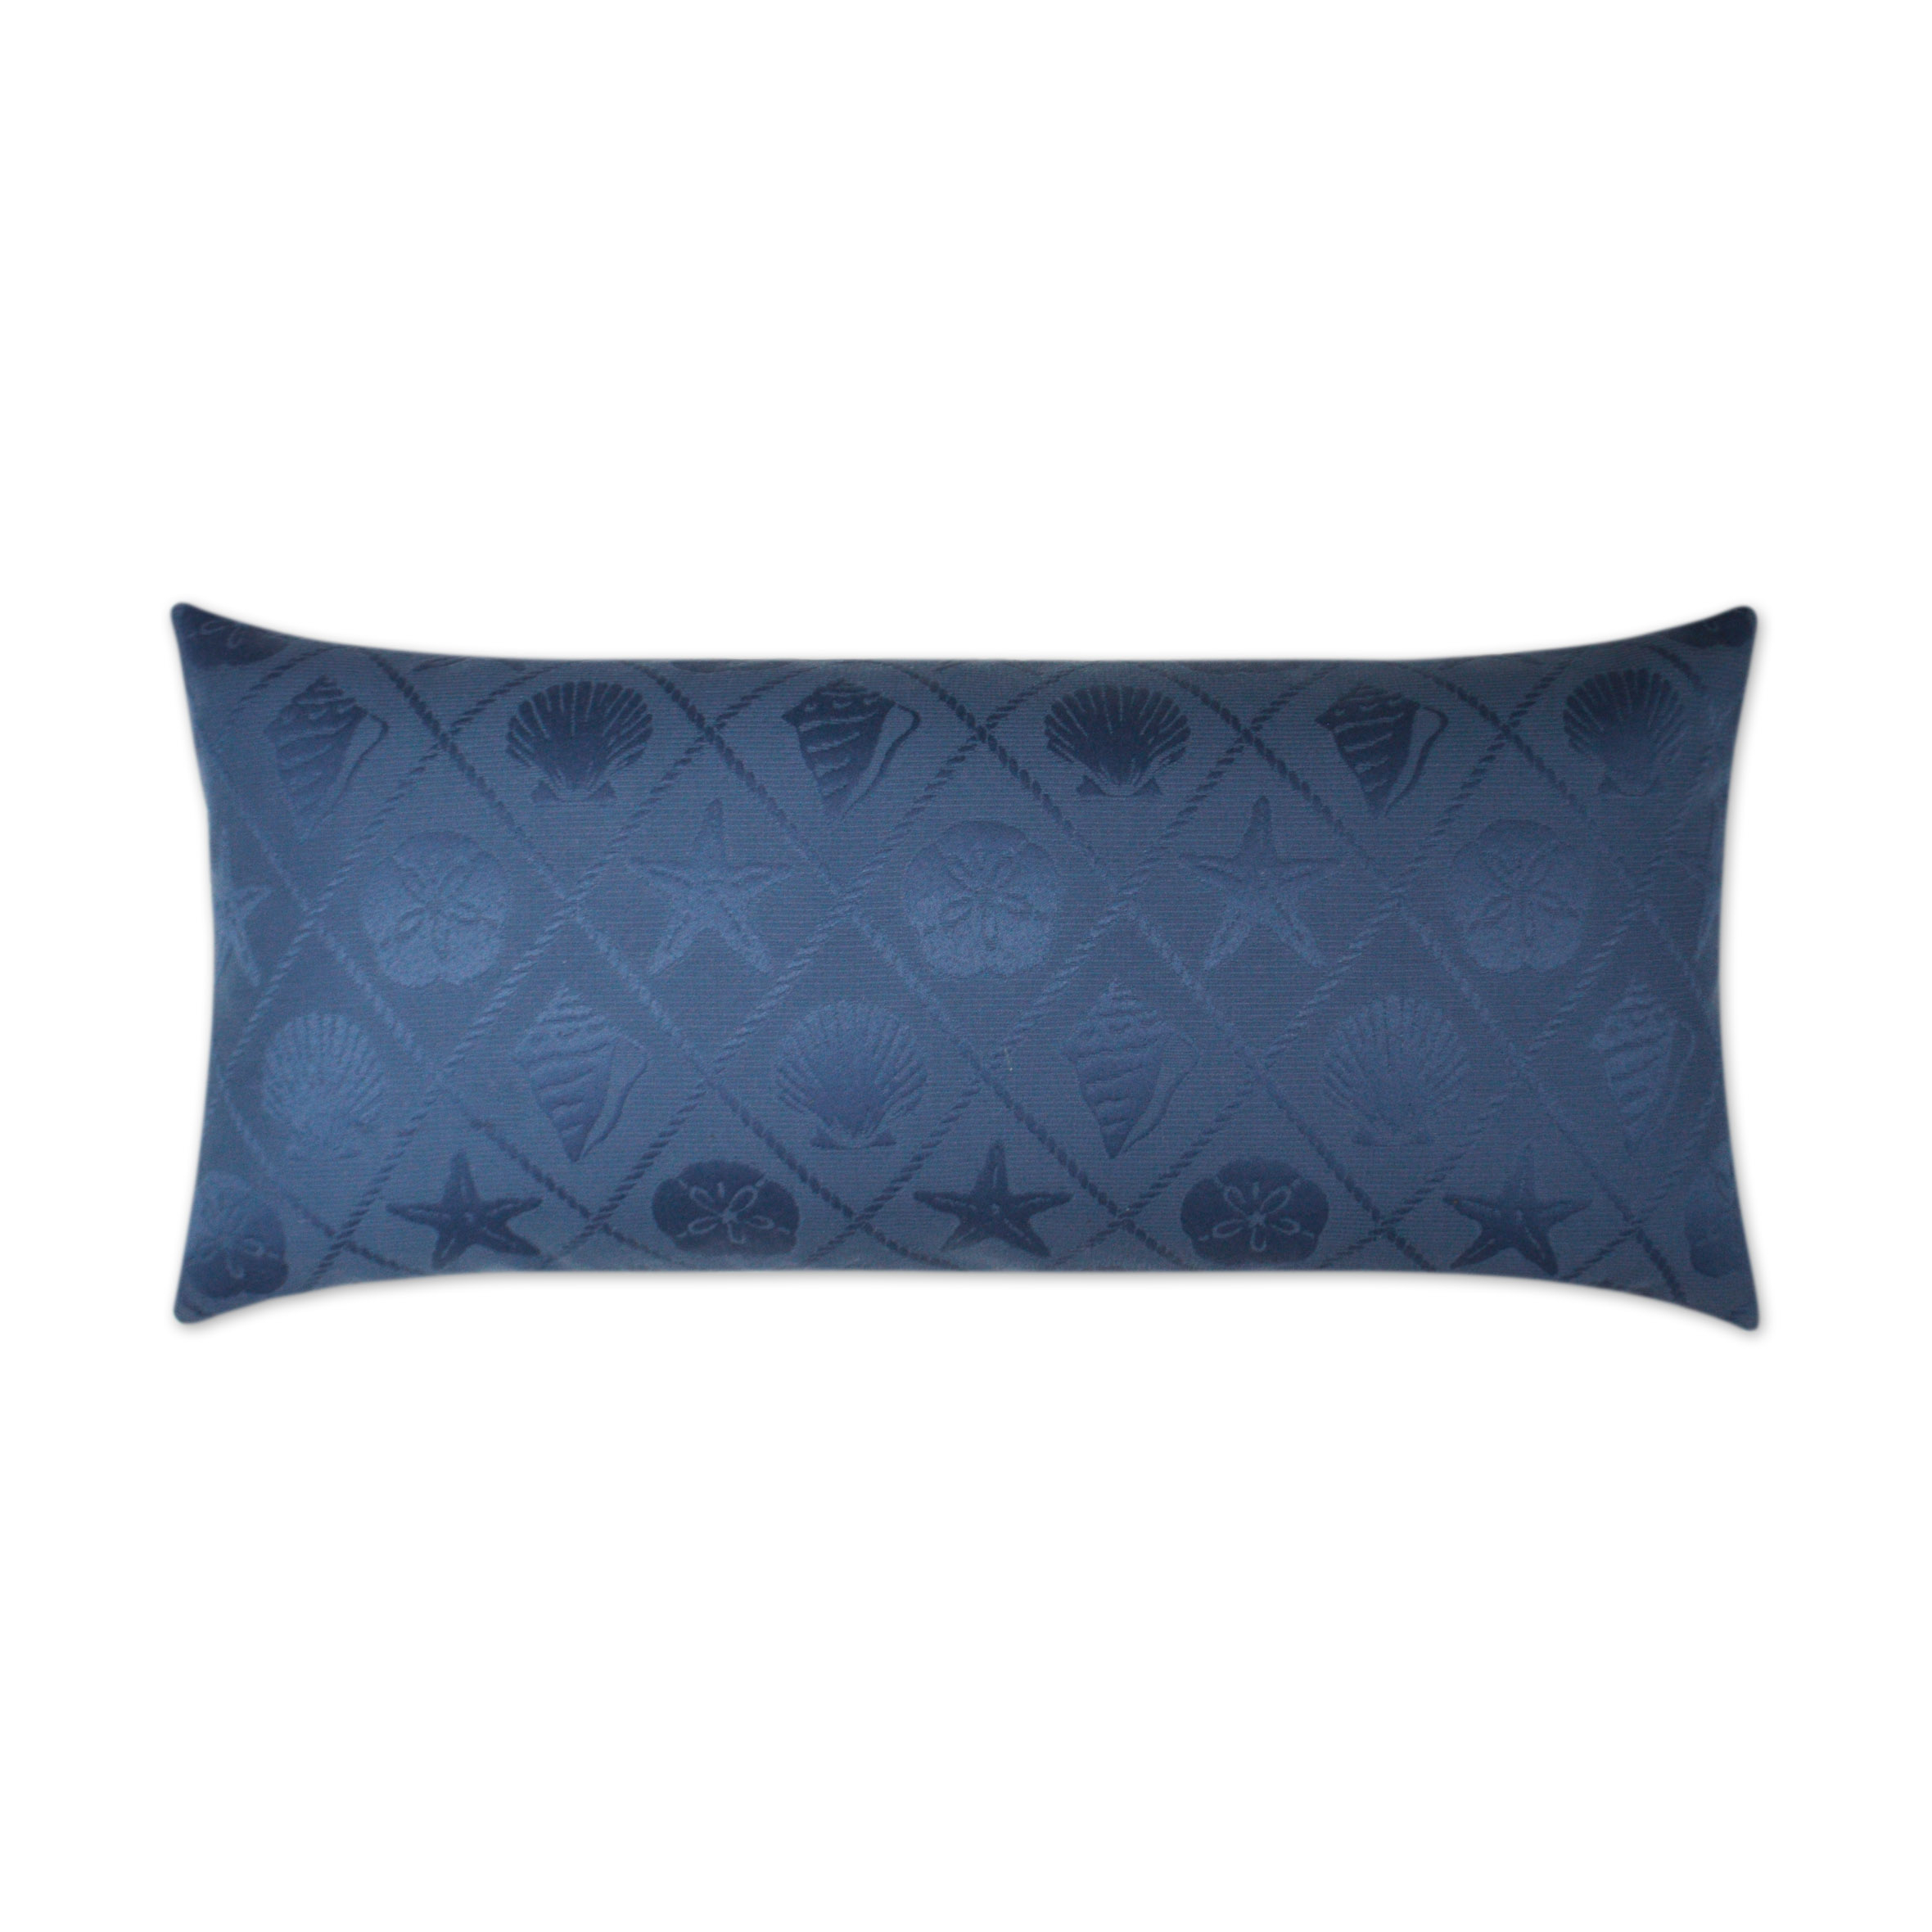 Shell Trellis Lumbar Outdoor Pillow 24x12